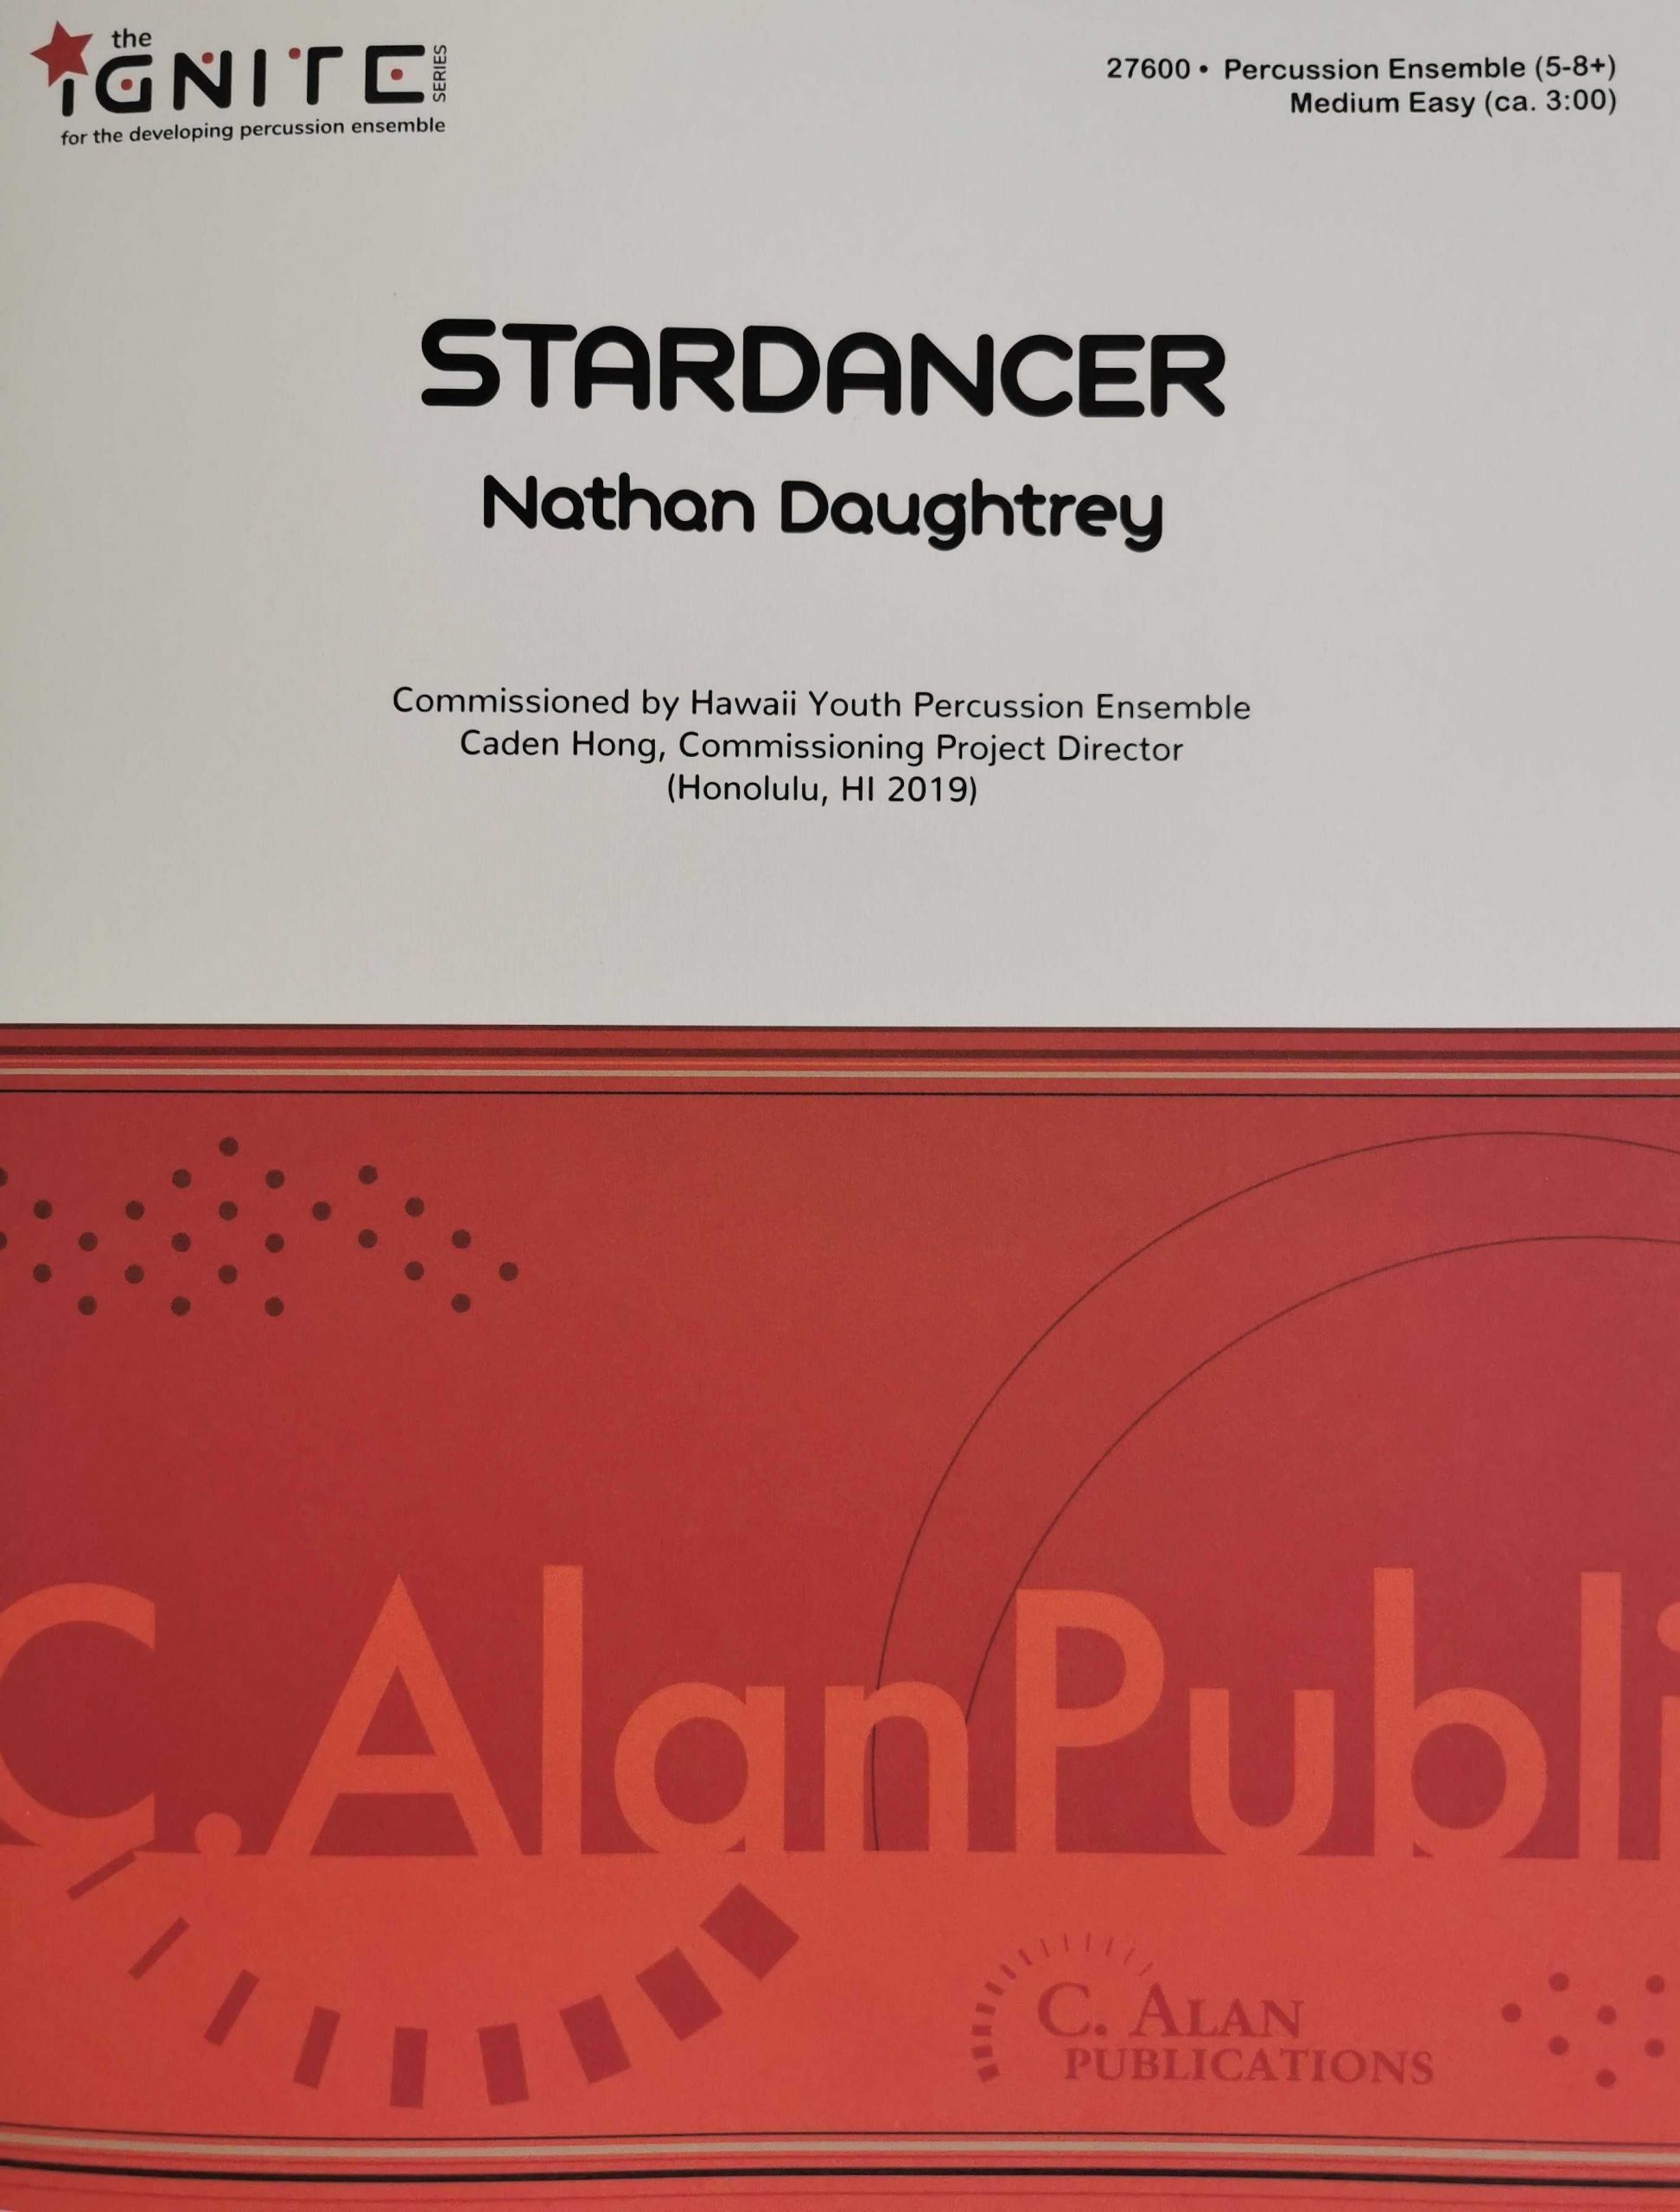 Stardancer by Nathan Daughtrey